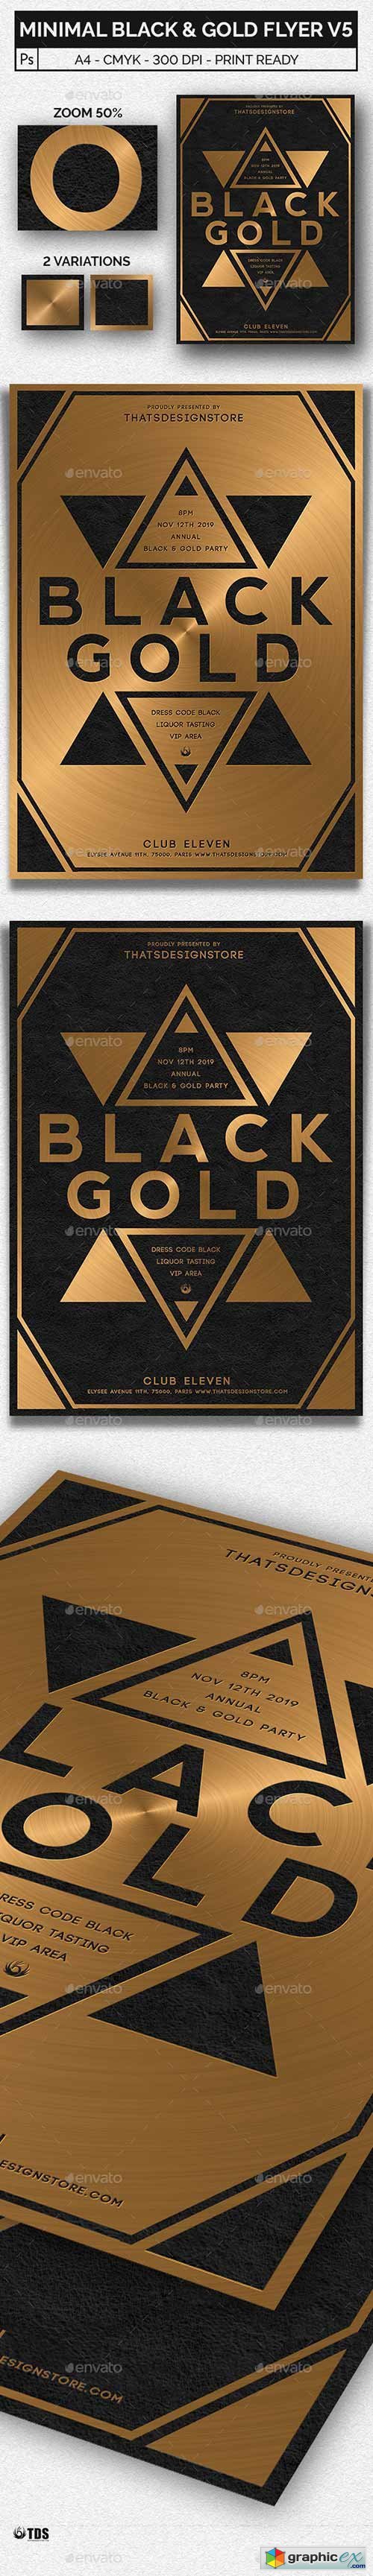 Minimal Black and Gold Flyer Template V5